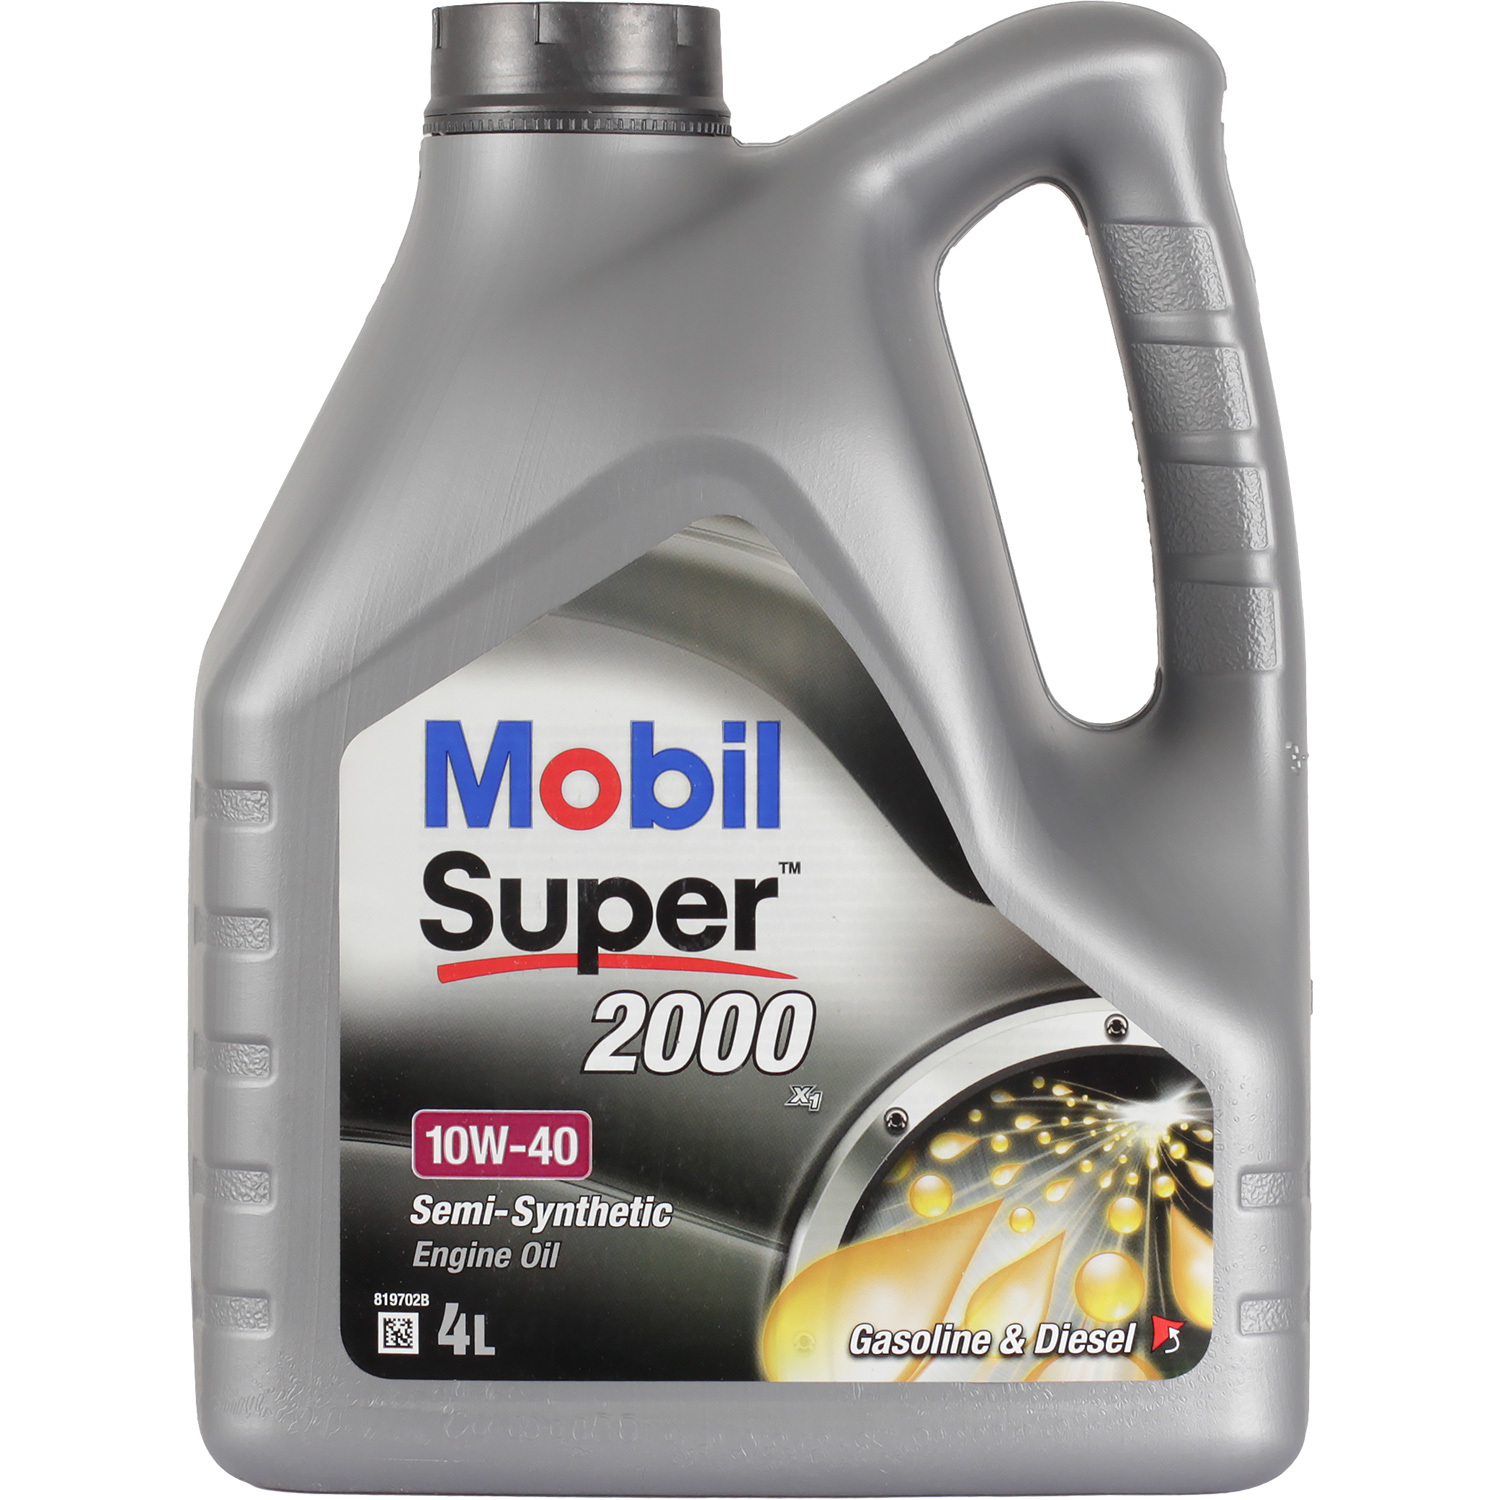 Mobil Моторное масло Mobil Super 2000 X1 10W-40, 4 л моторное масло mobil super 2000 x1 10w 40 4 л